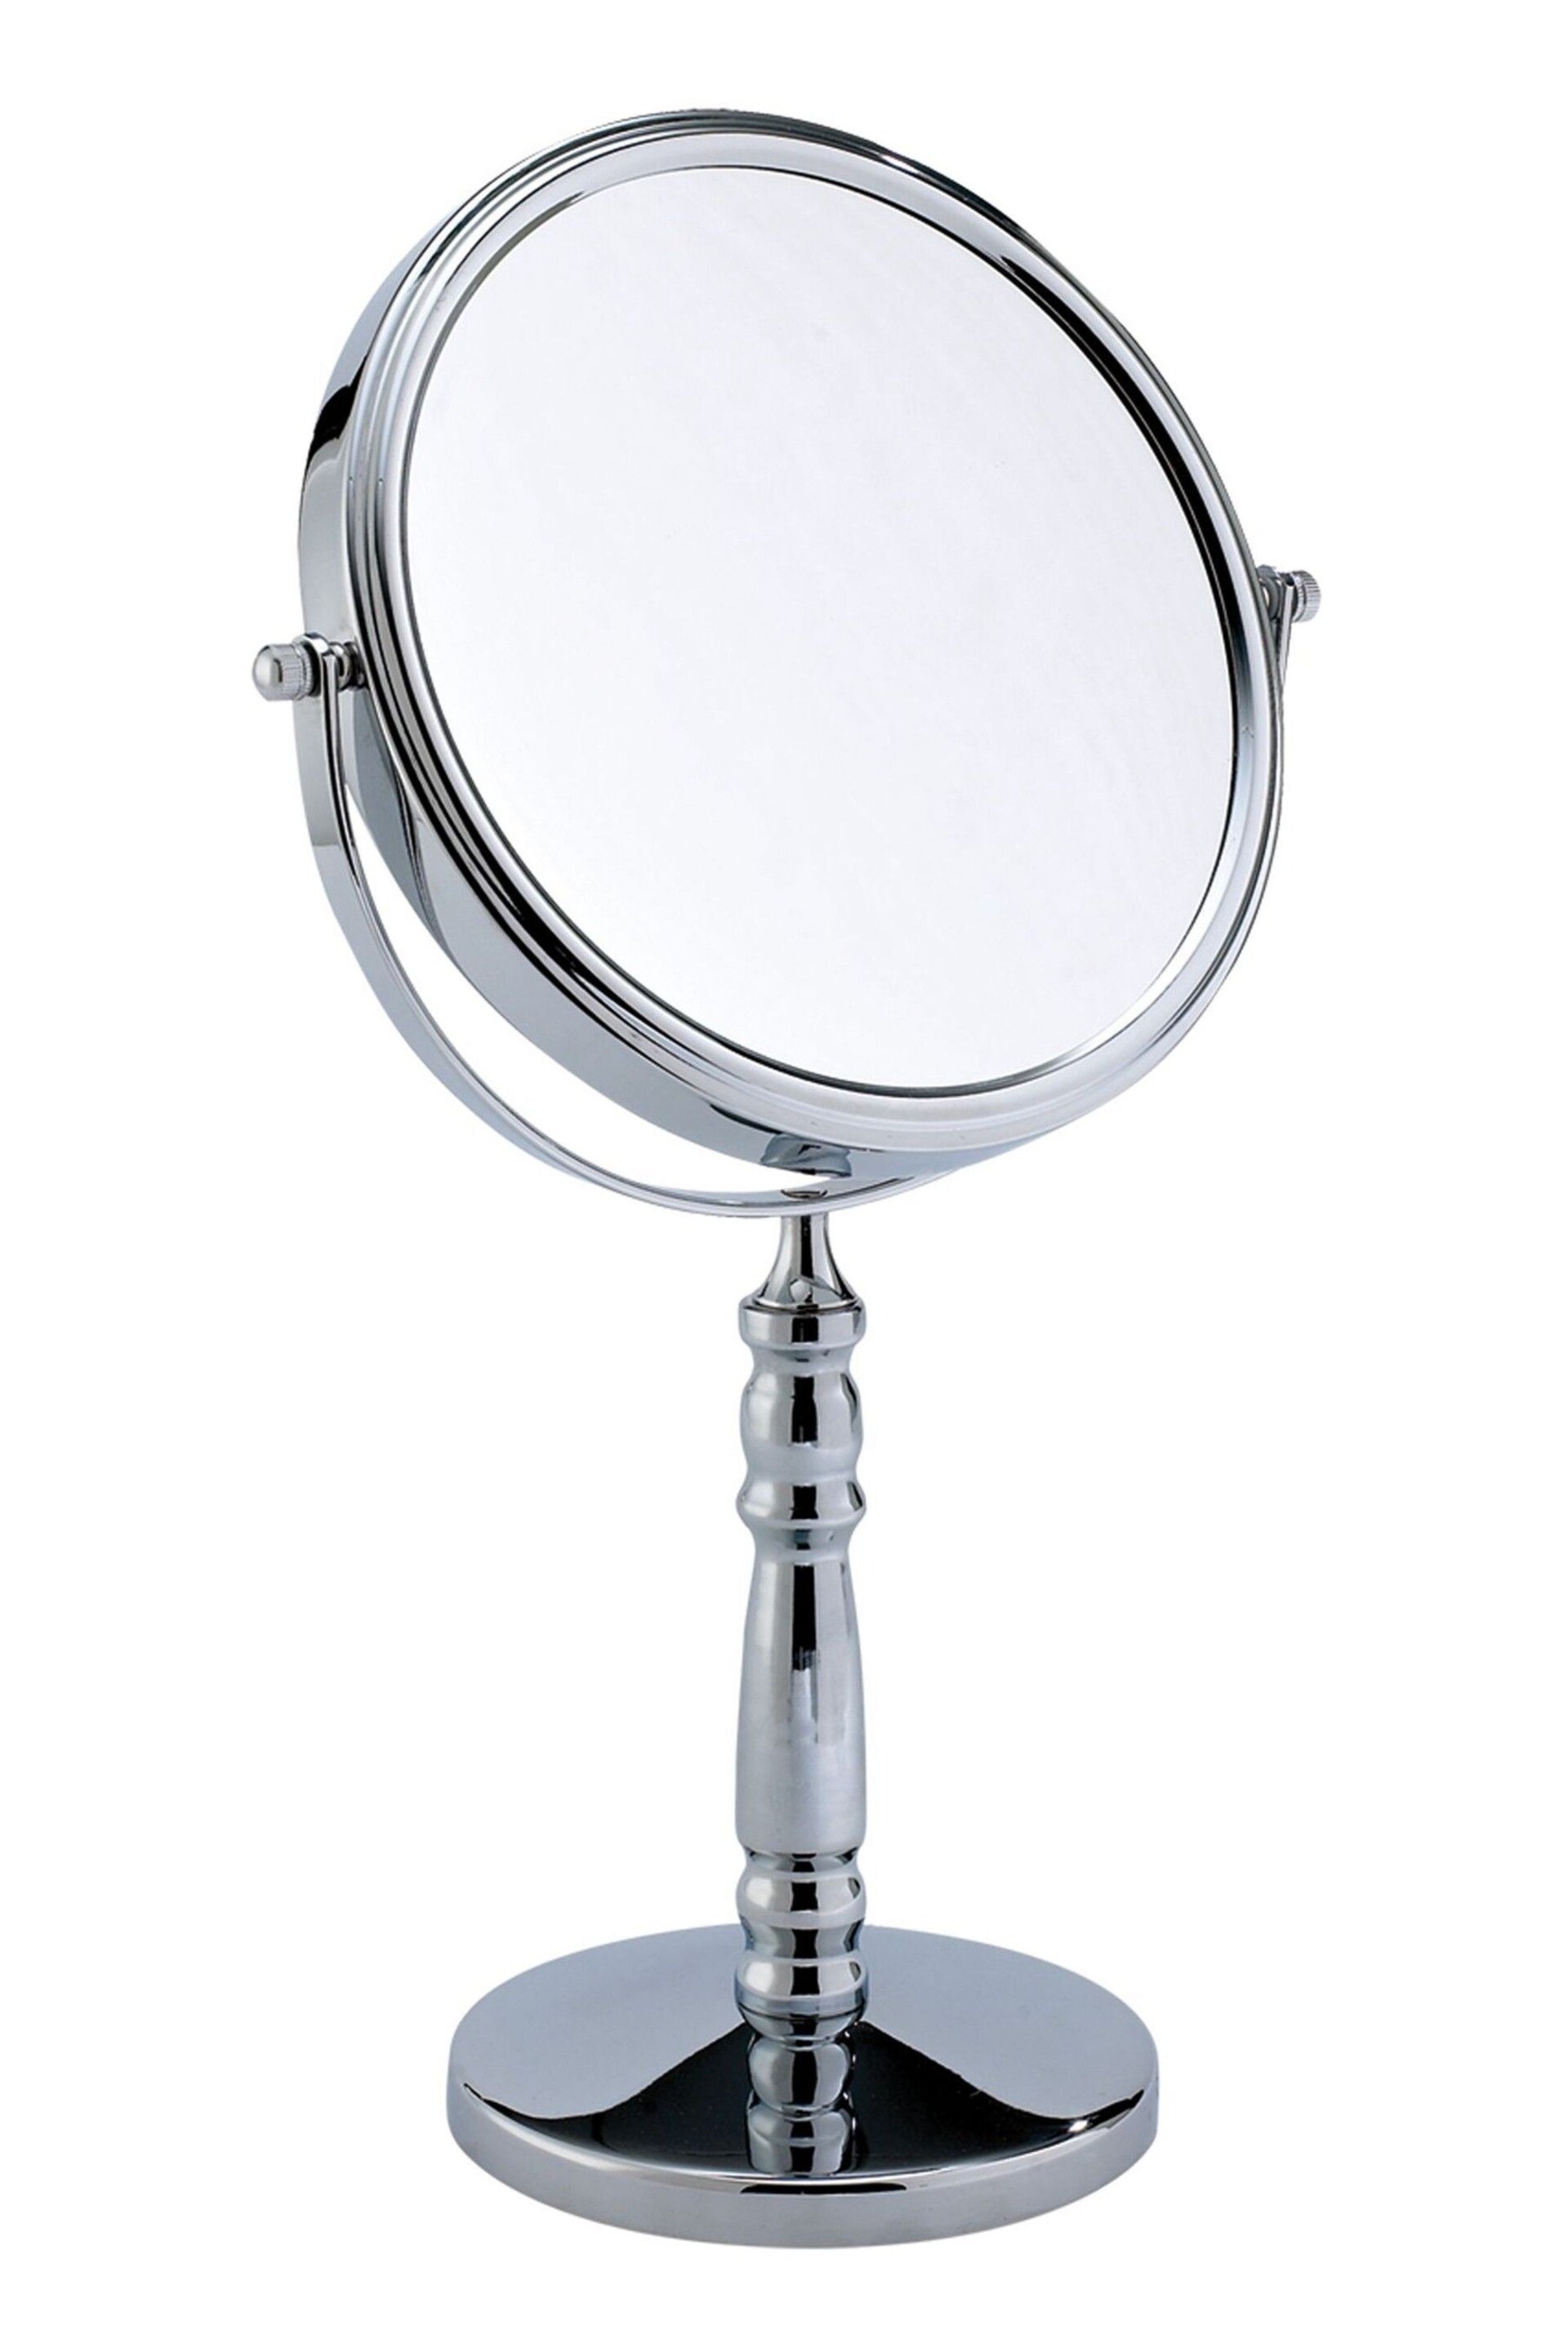 Showerdrape Chrome Vanity Mirror Round 5x Magnification Reversable Rho - Image 2 of 2